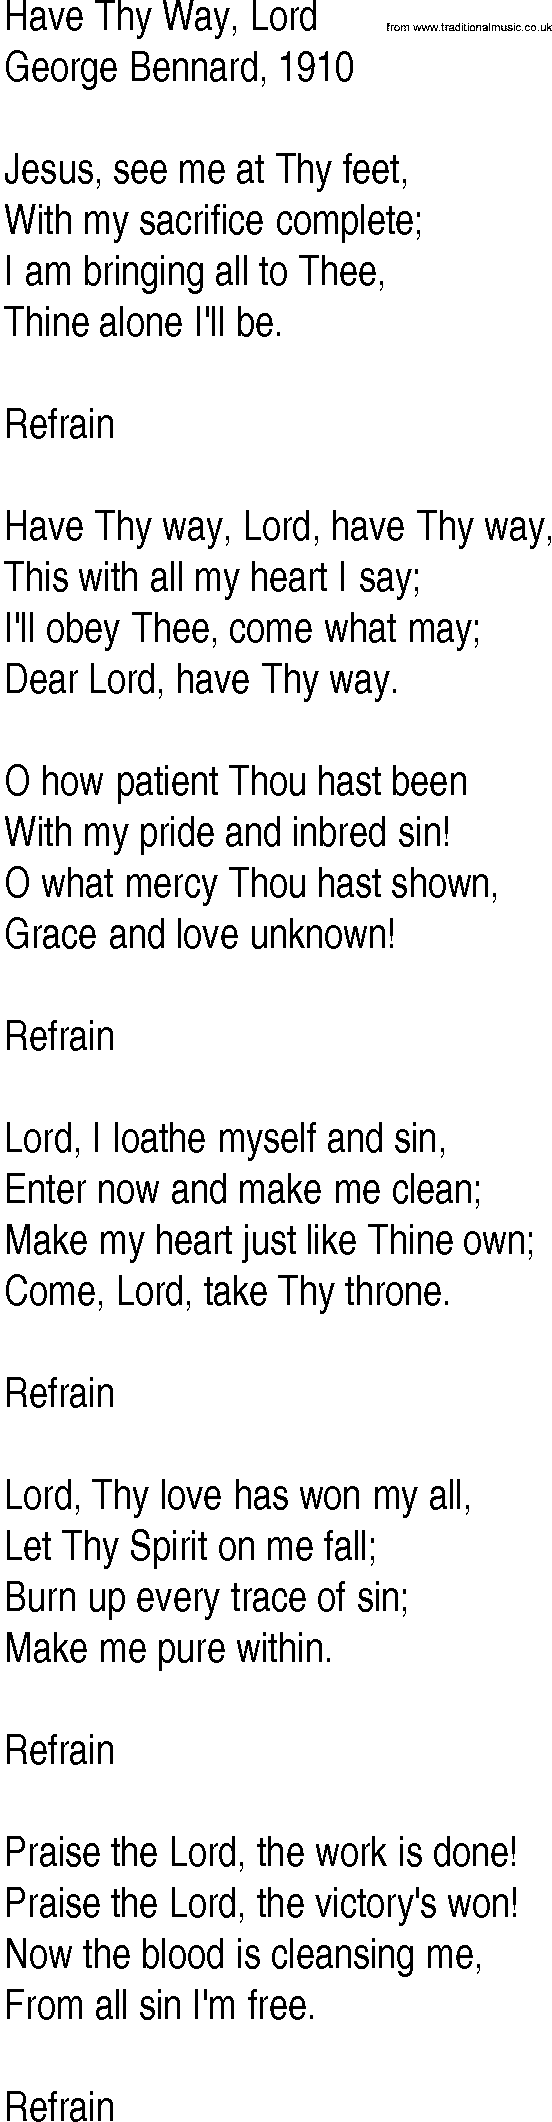 Hymn and Gospel Song: Have Thy Way, Lord by George Bennard lyrics